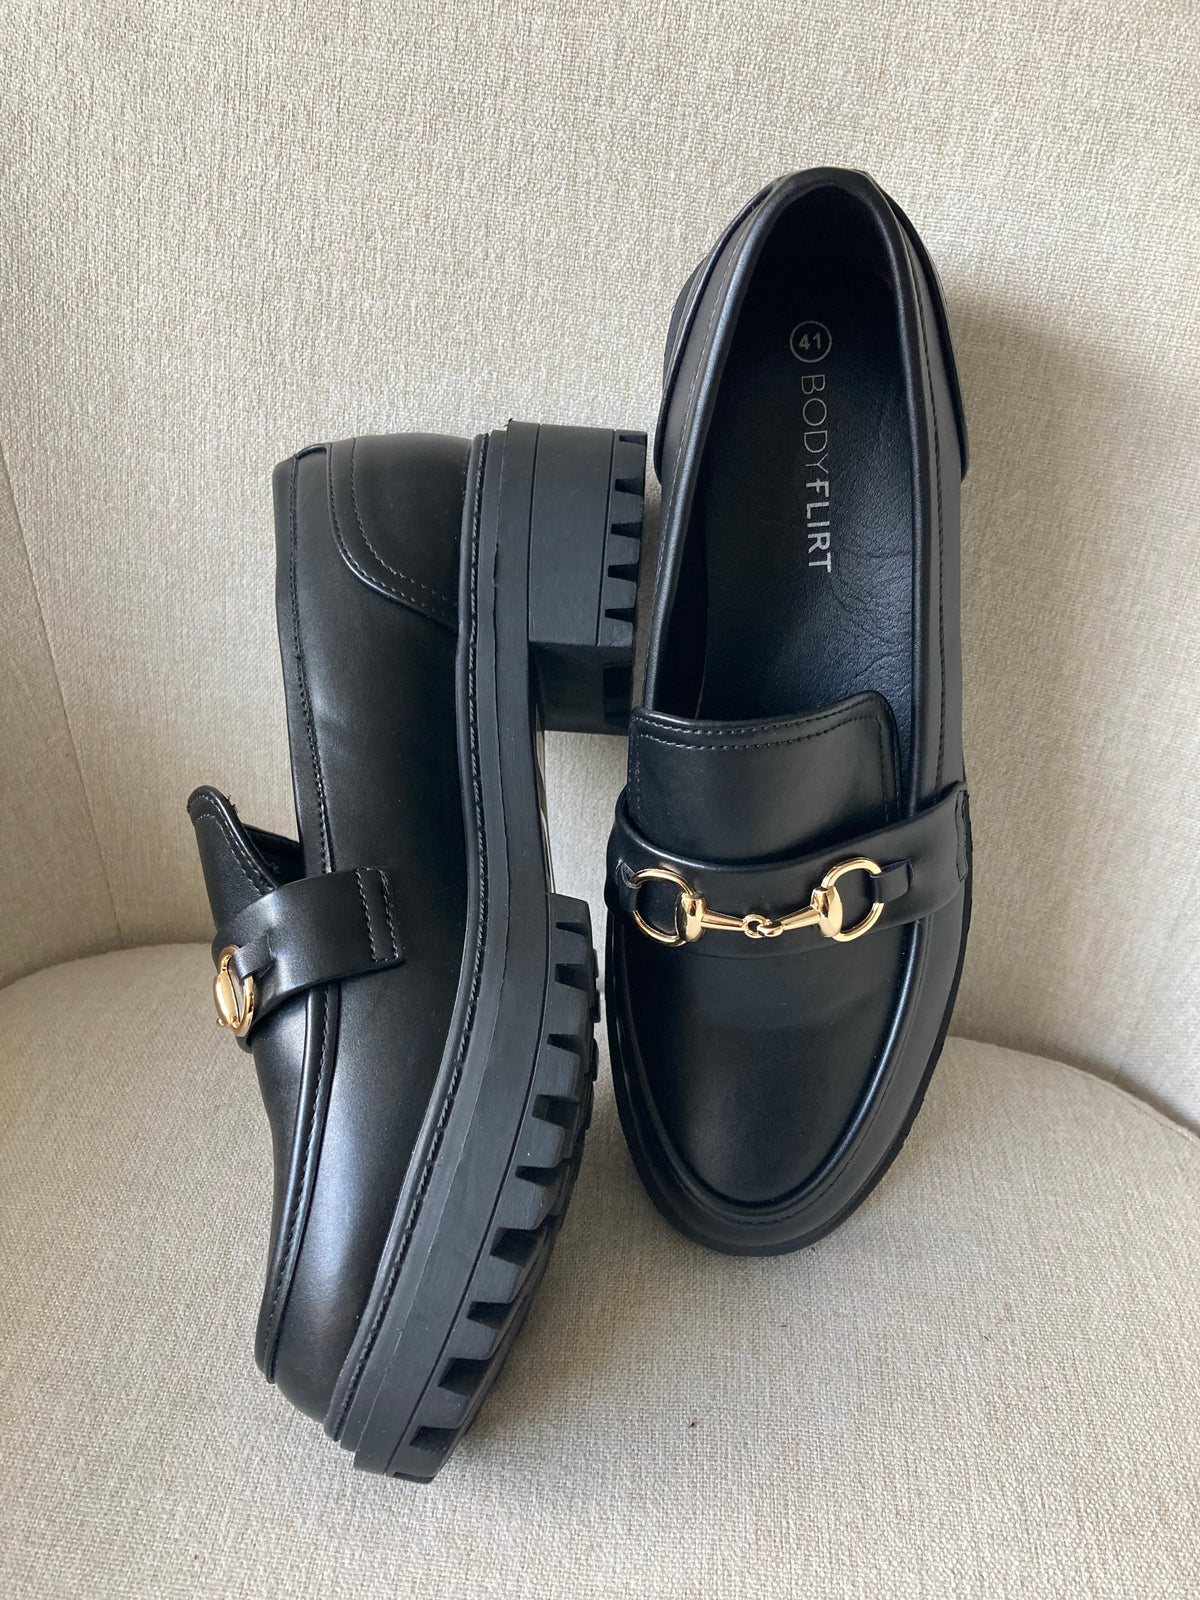 Classy Black Penny Loafers by BODYFLIRT